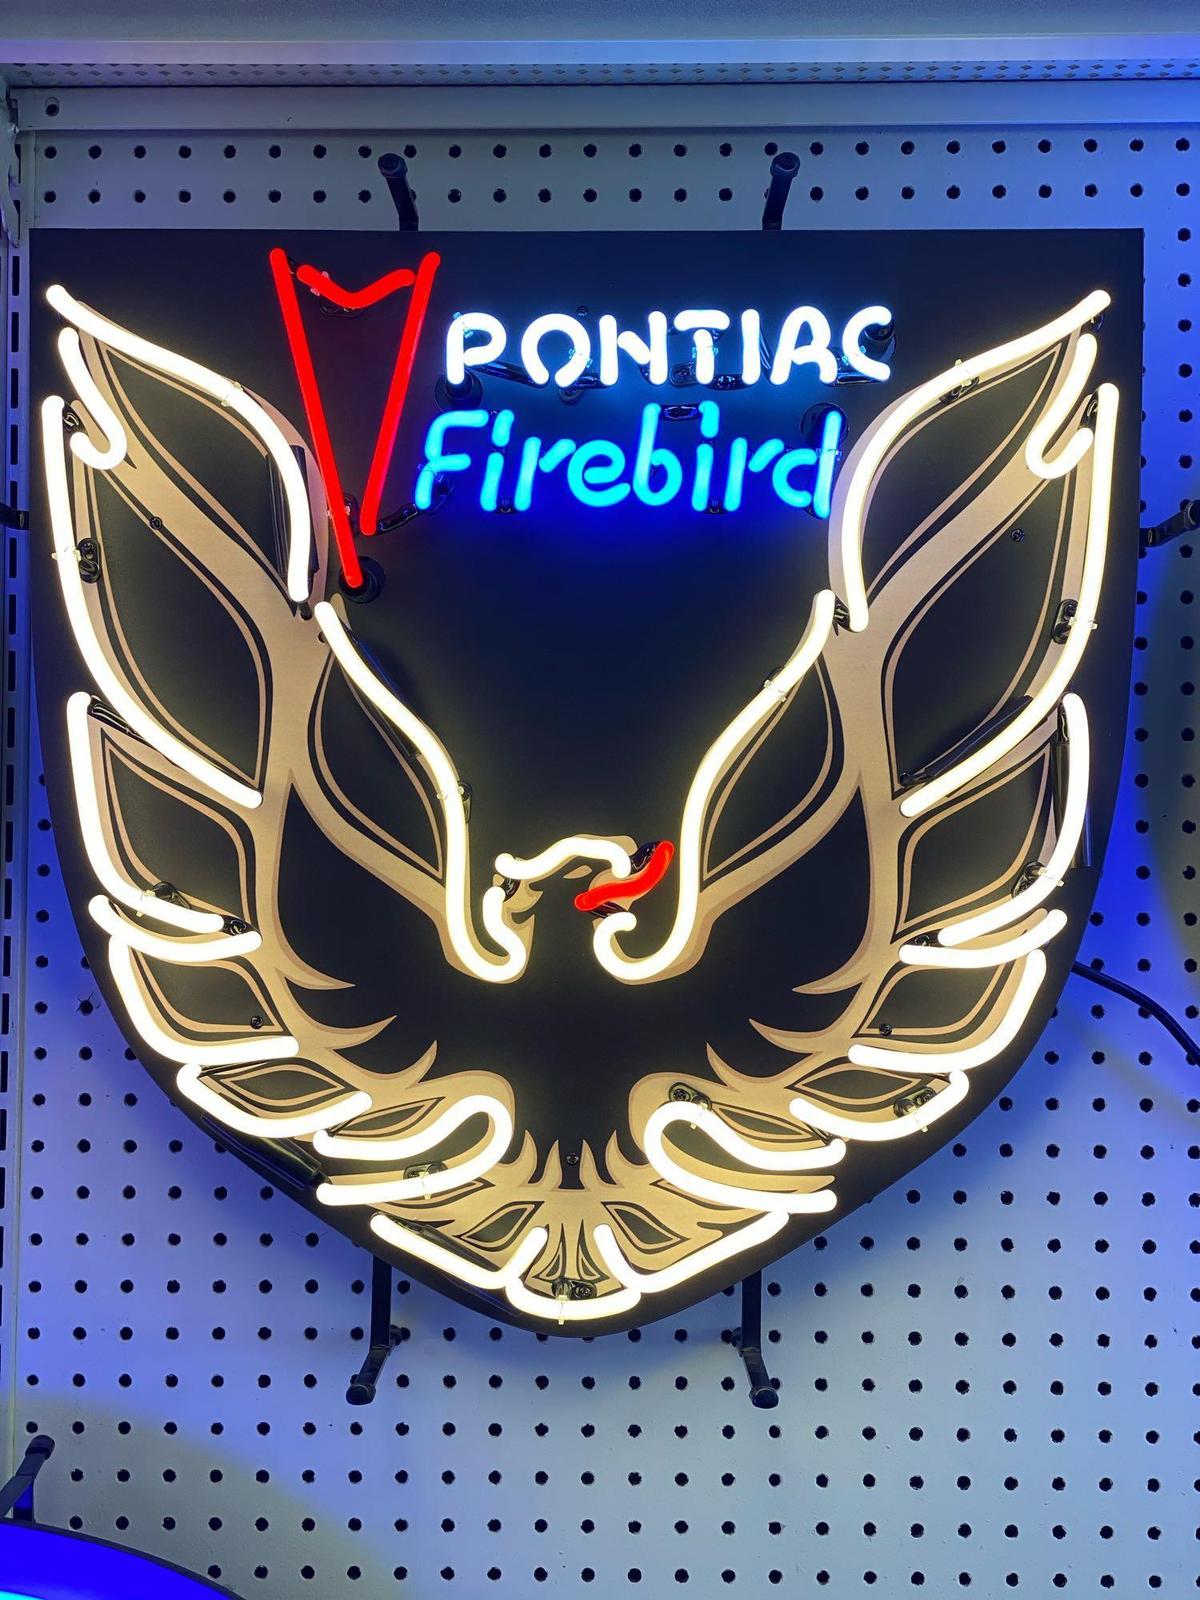 PONTIAC FIREBIRD NEON